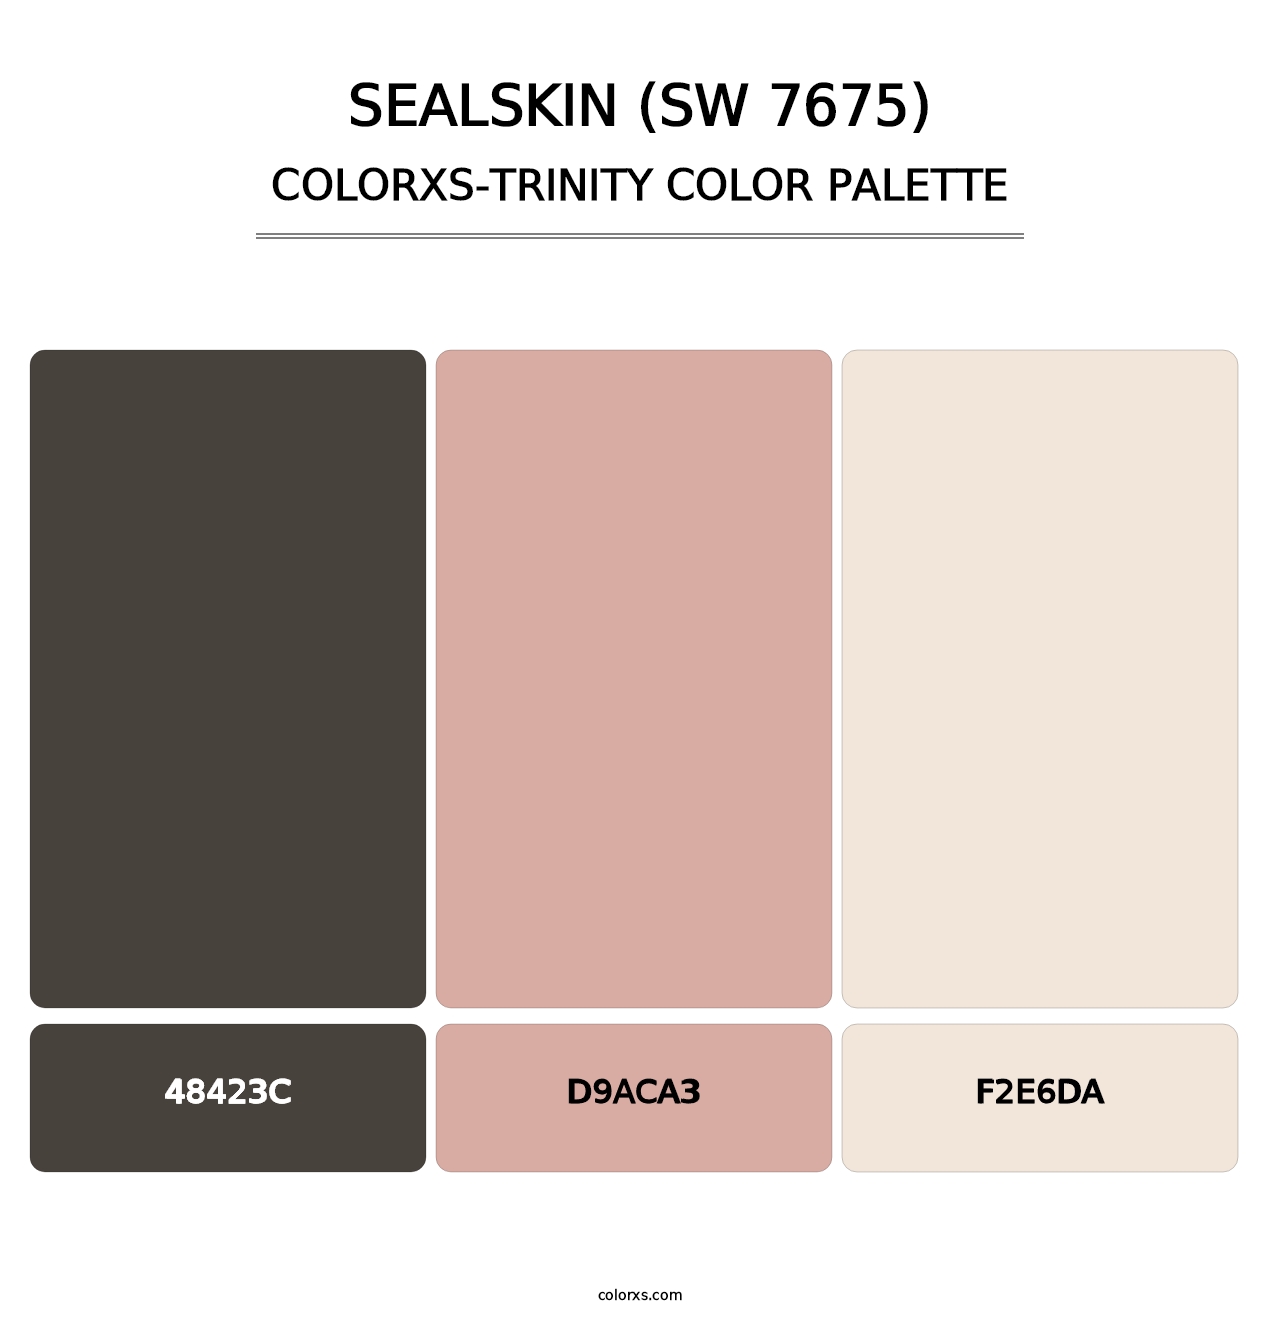 Sealskin (SW 7675) - Colorxs Trinity Palette